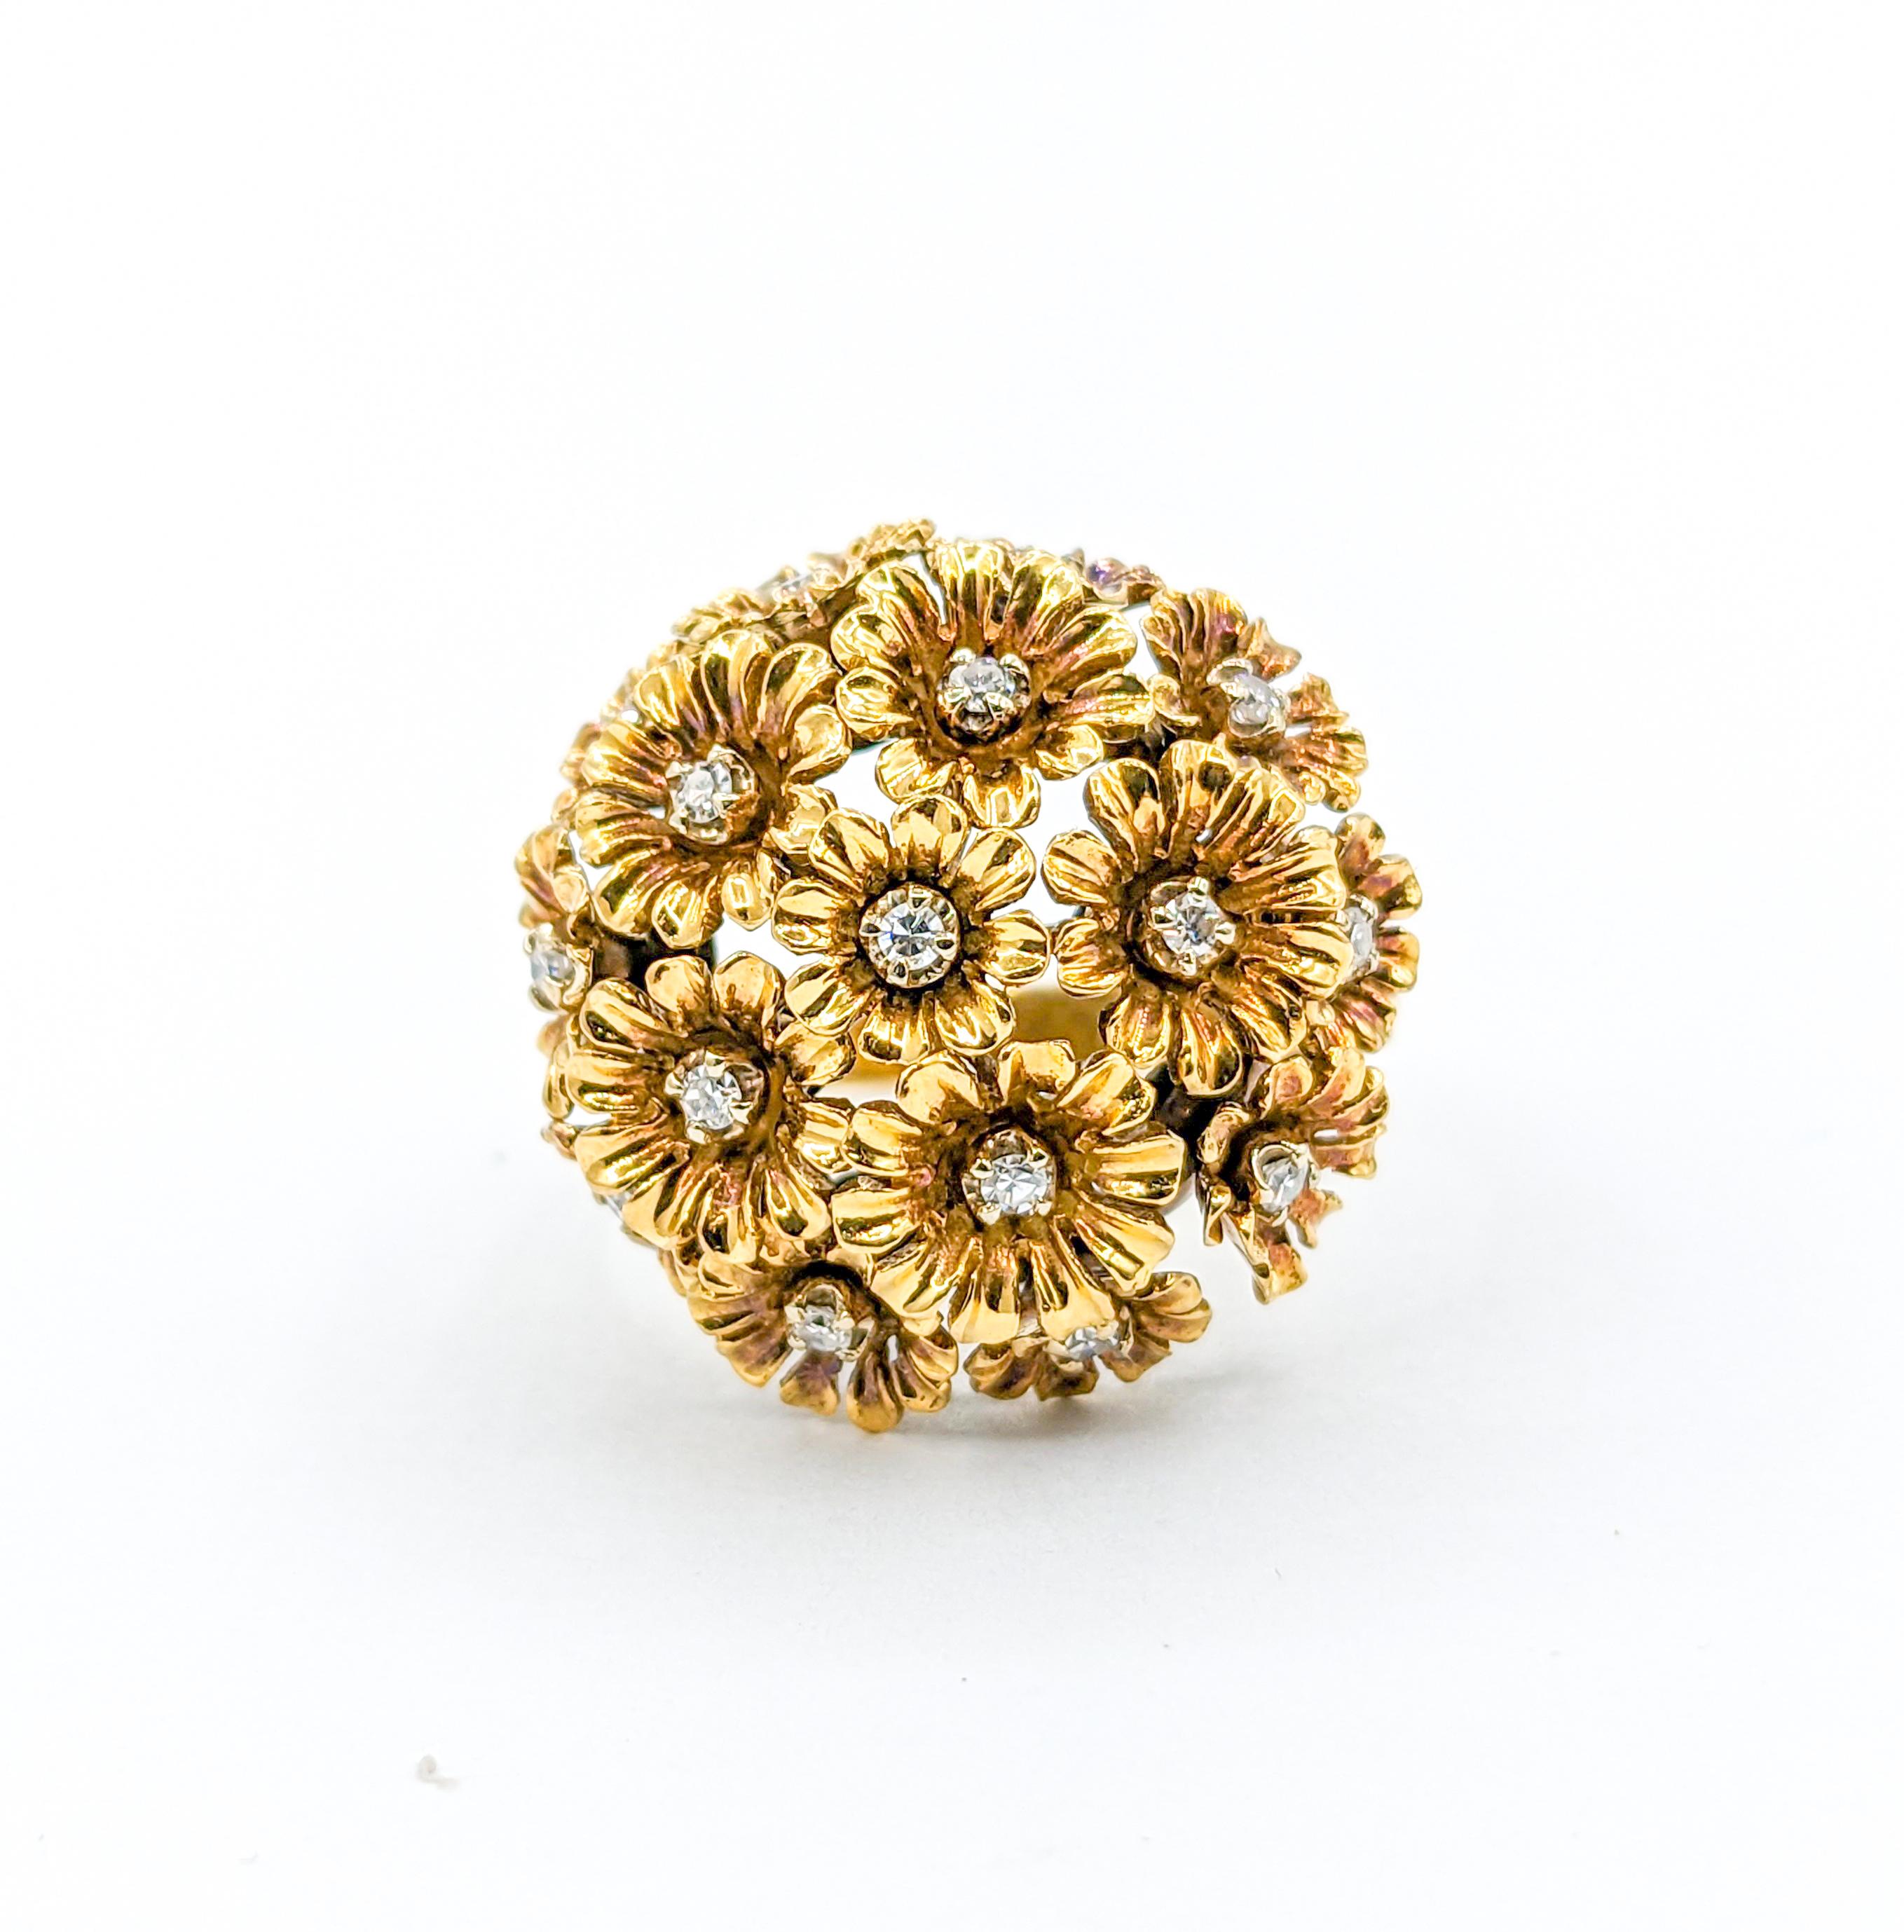 Whimsical Tremblant Flower Cluster Diamond Ring in 18K Gold For Sale 3